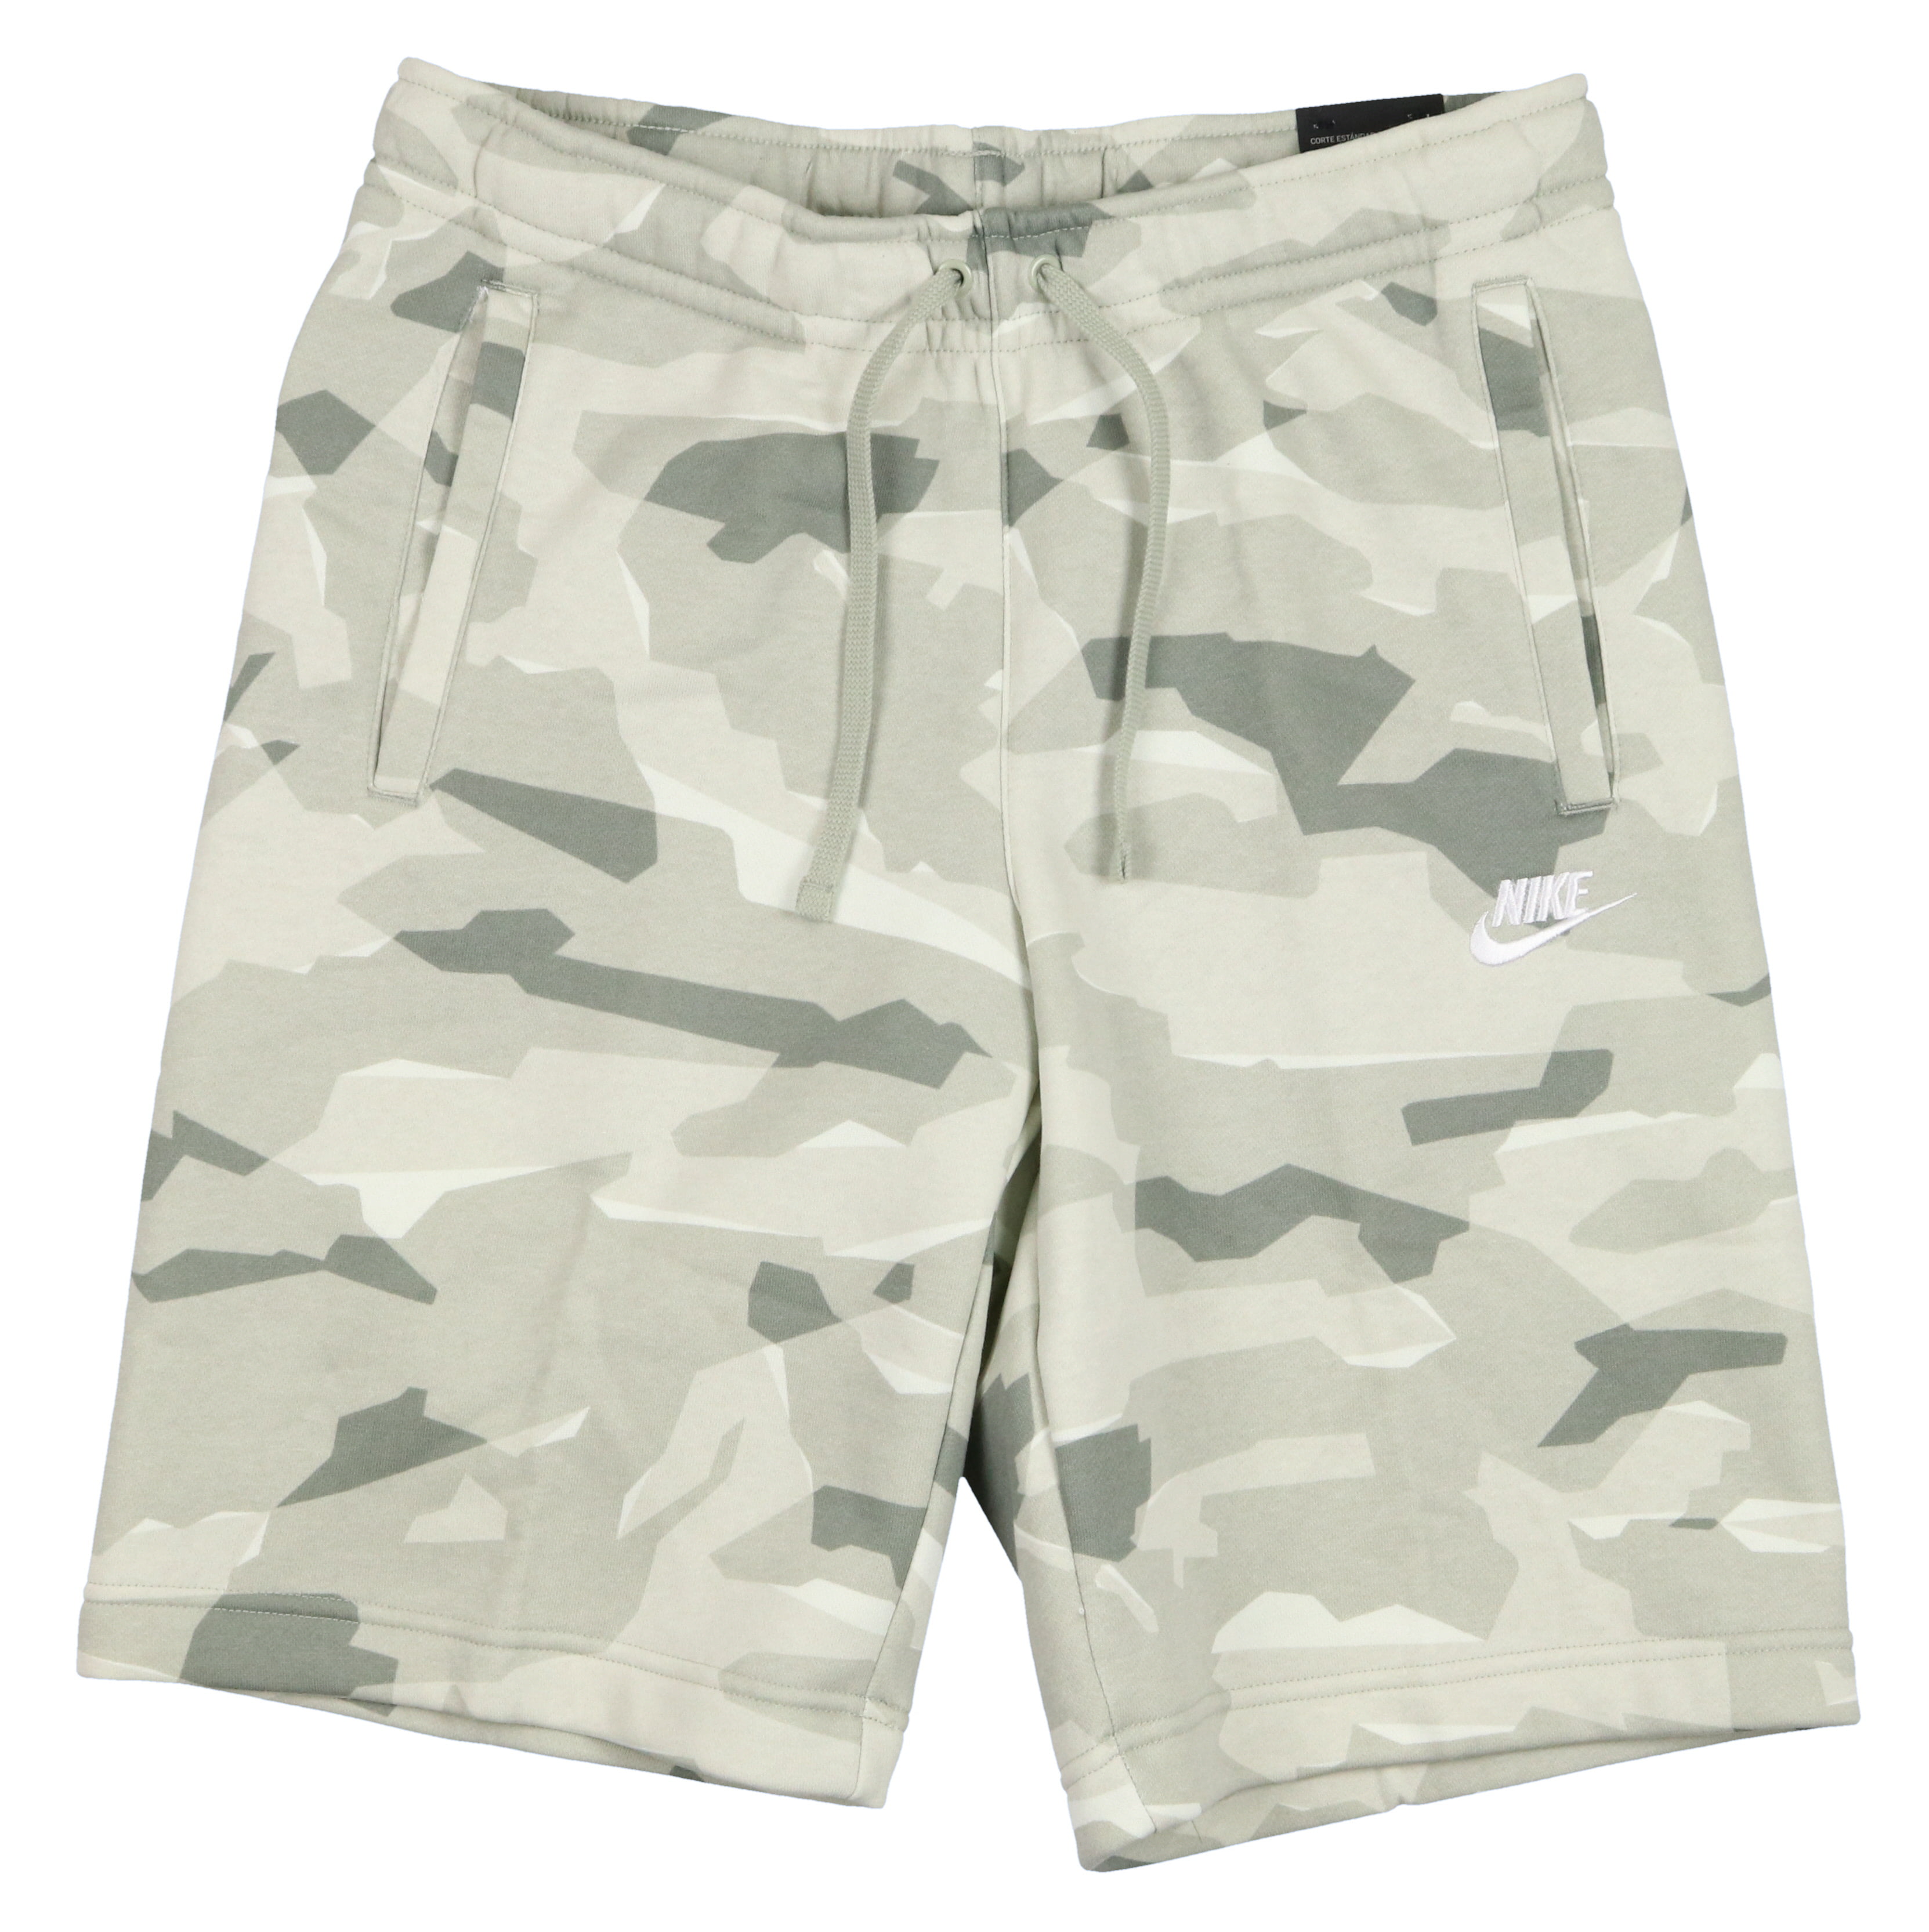 Buy > nike camo fleece shorts > in stock